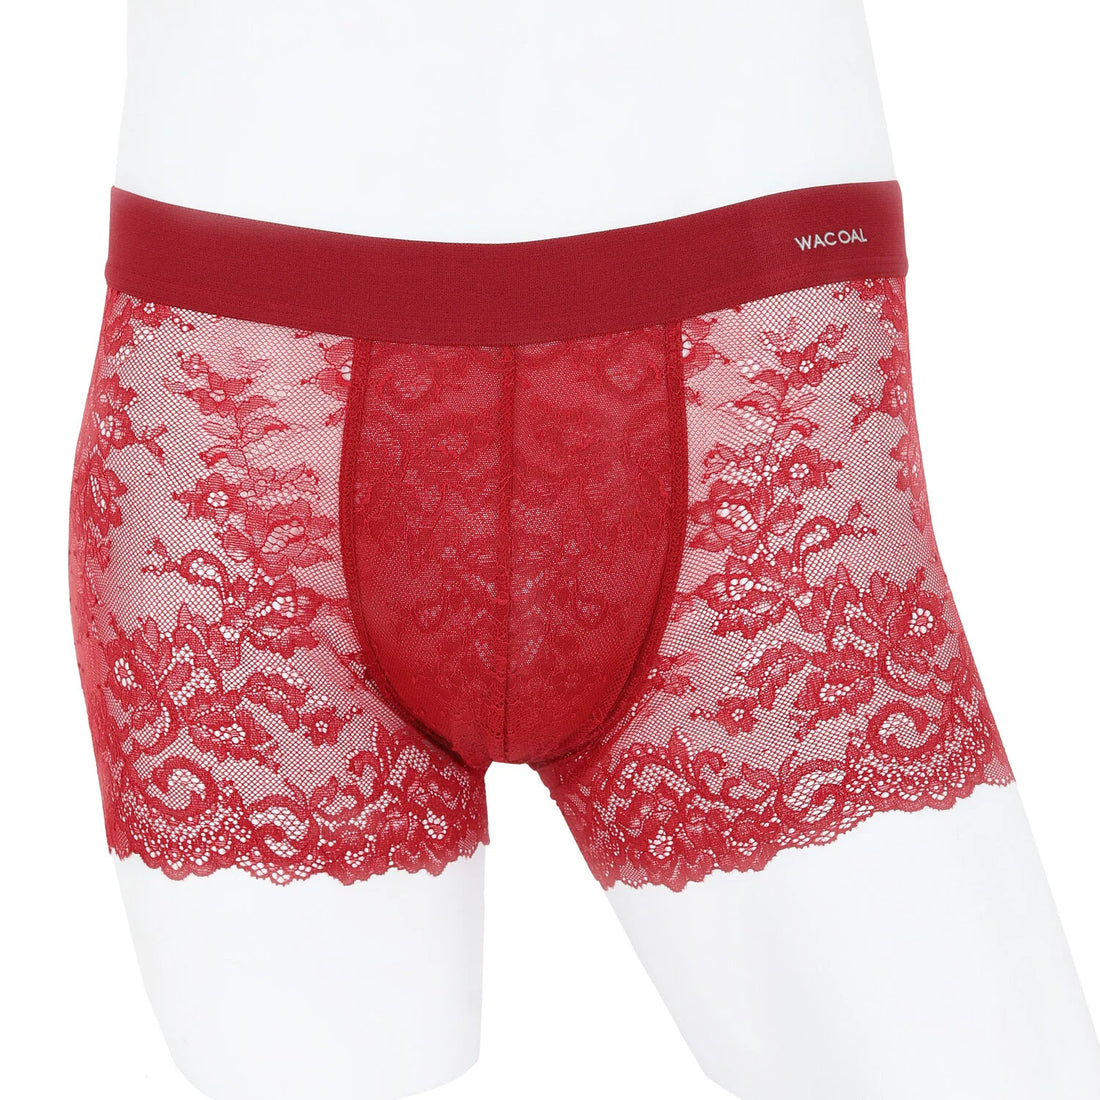 Wacoal Freedom LIMITED UNDERWEAR Men's Underwear Lace (Lace Boxer) Model WX2652 Red (RE)